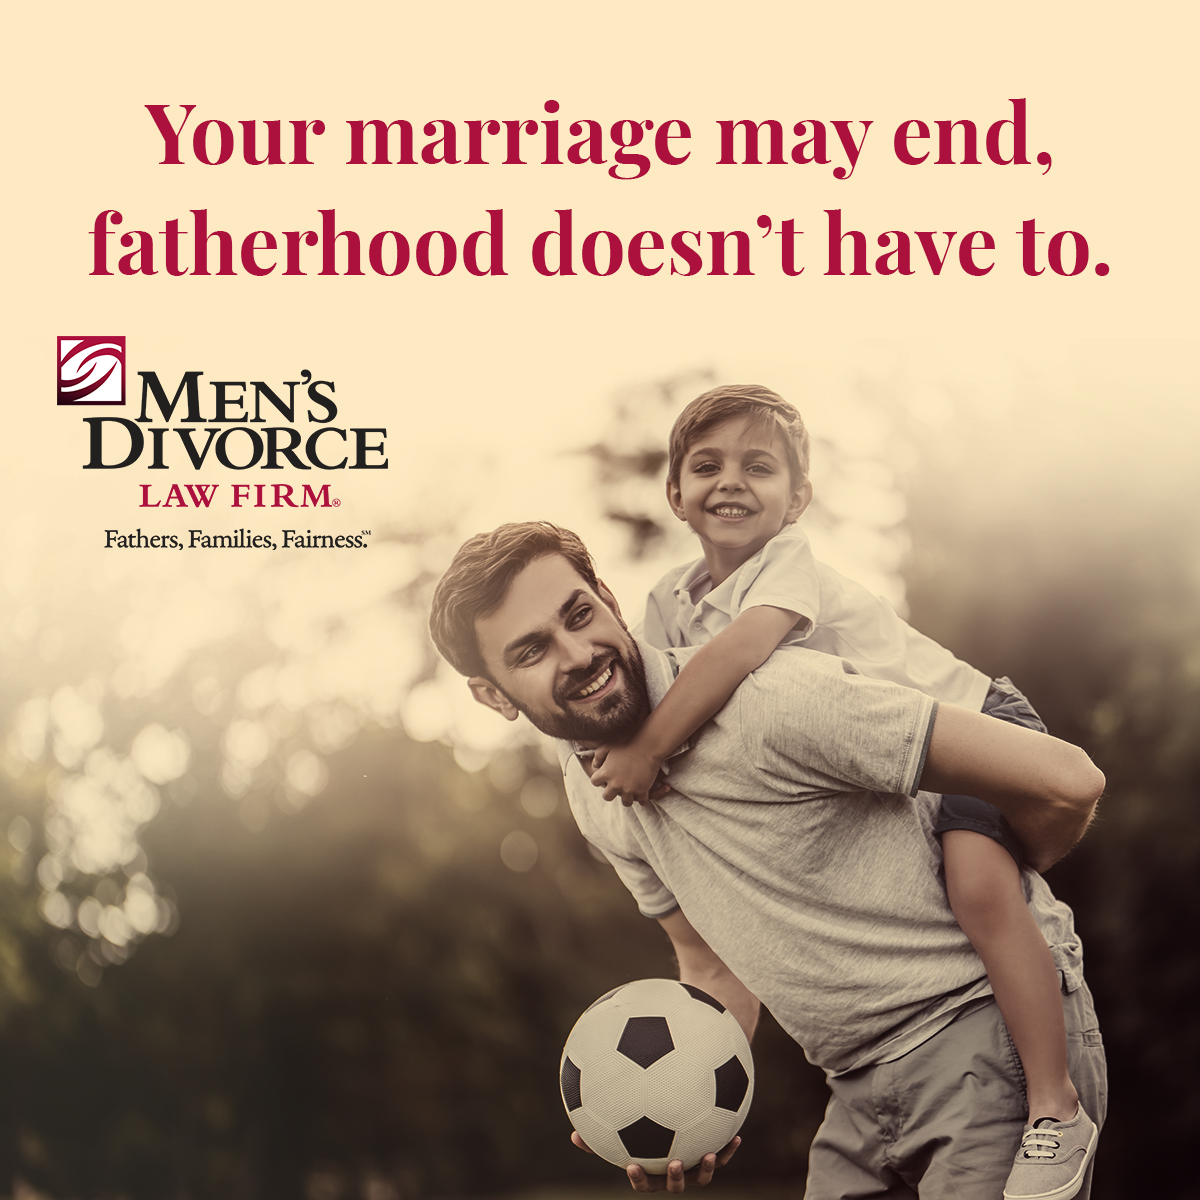 Men's Divorce Law Firm Photo